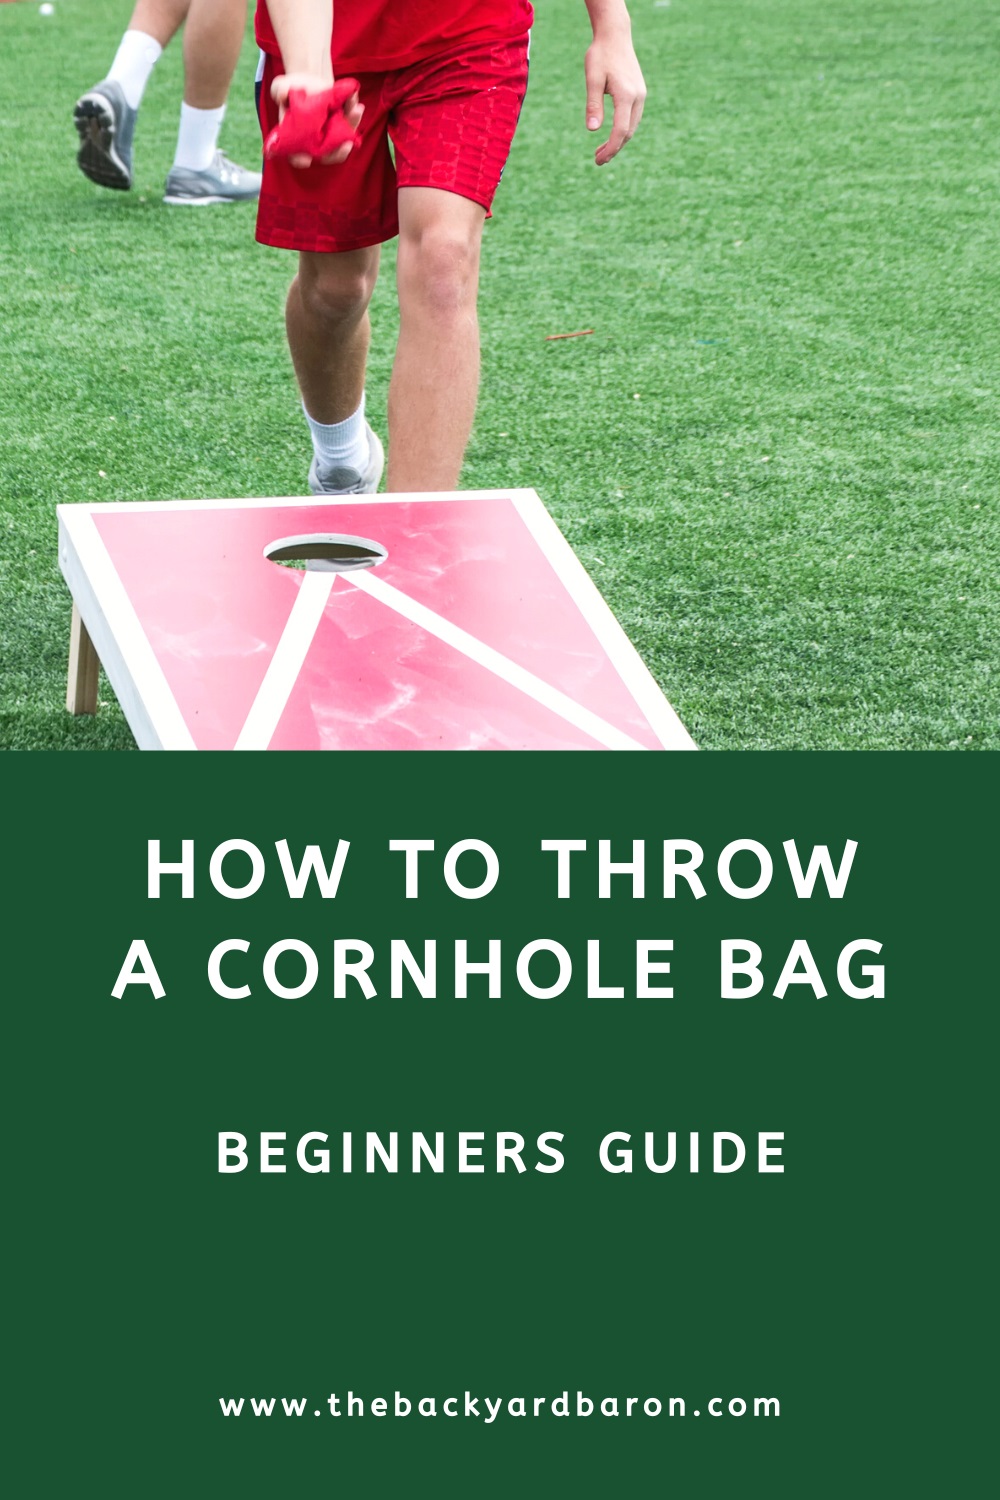 How to throw a cornhole bag (beginners guide)